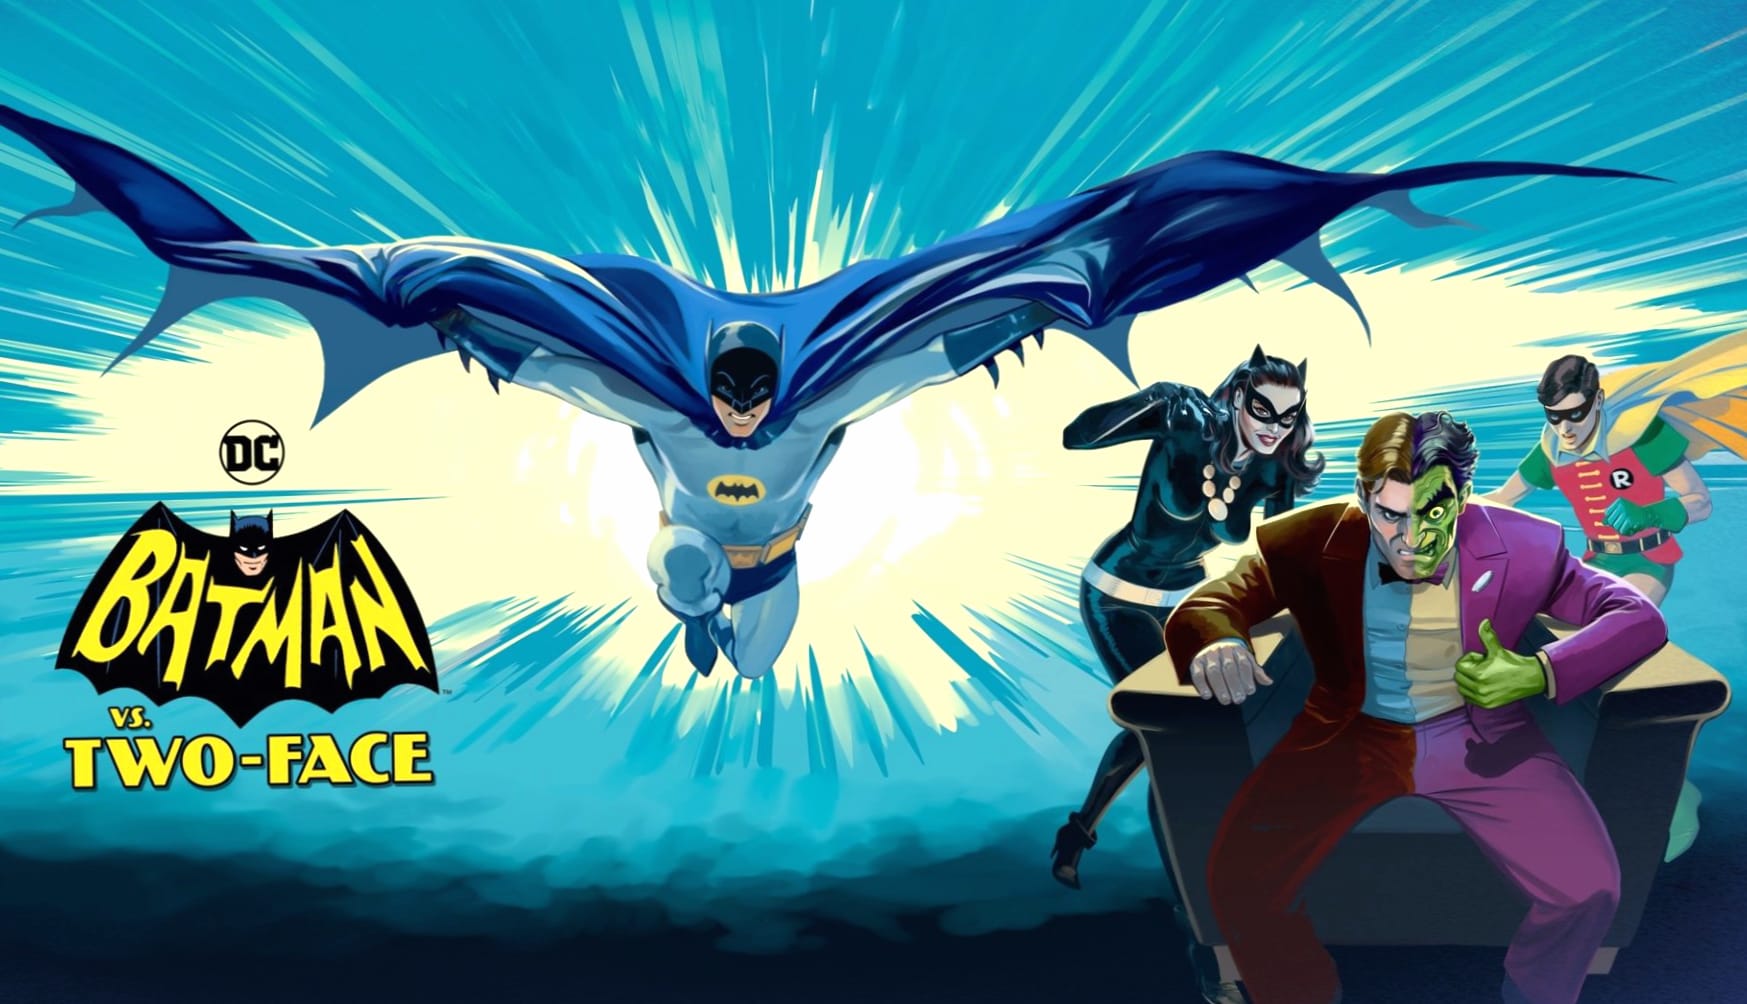 Batman vs. Two-Face wallpapers HD quality